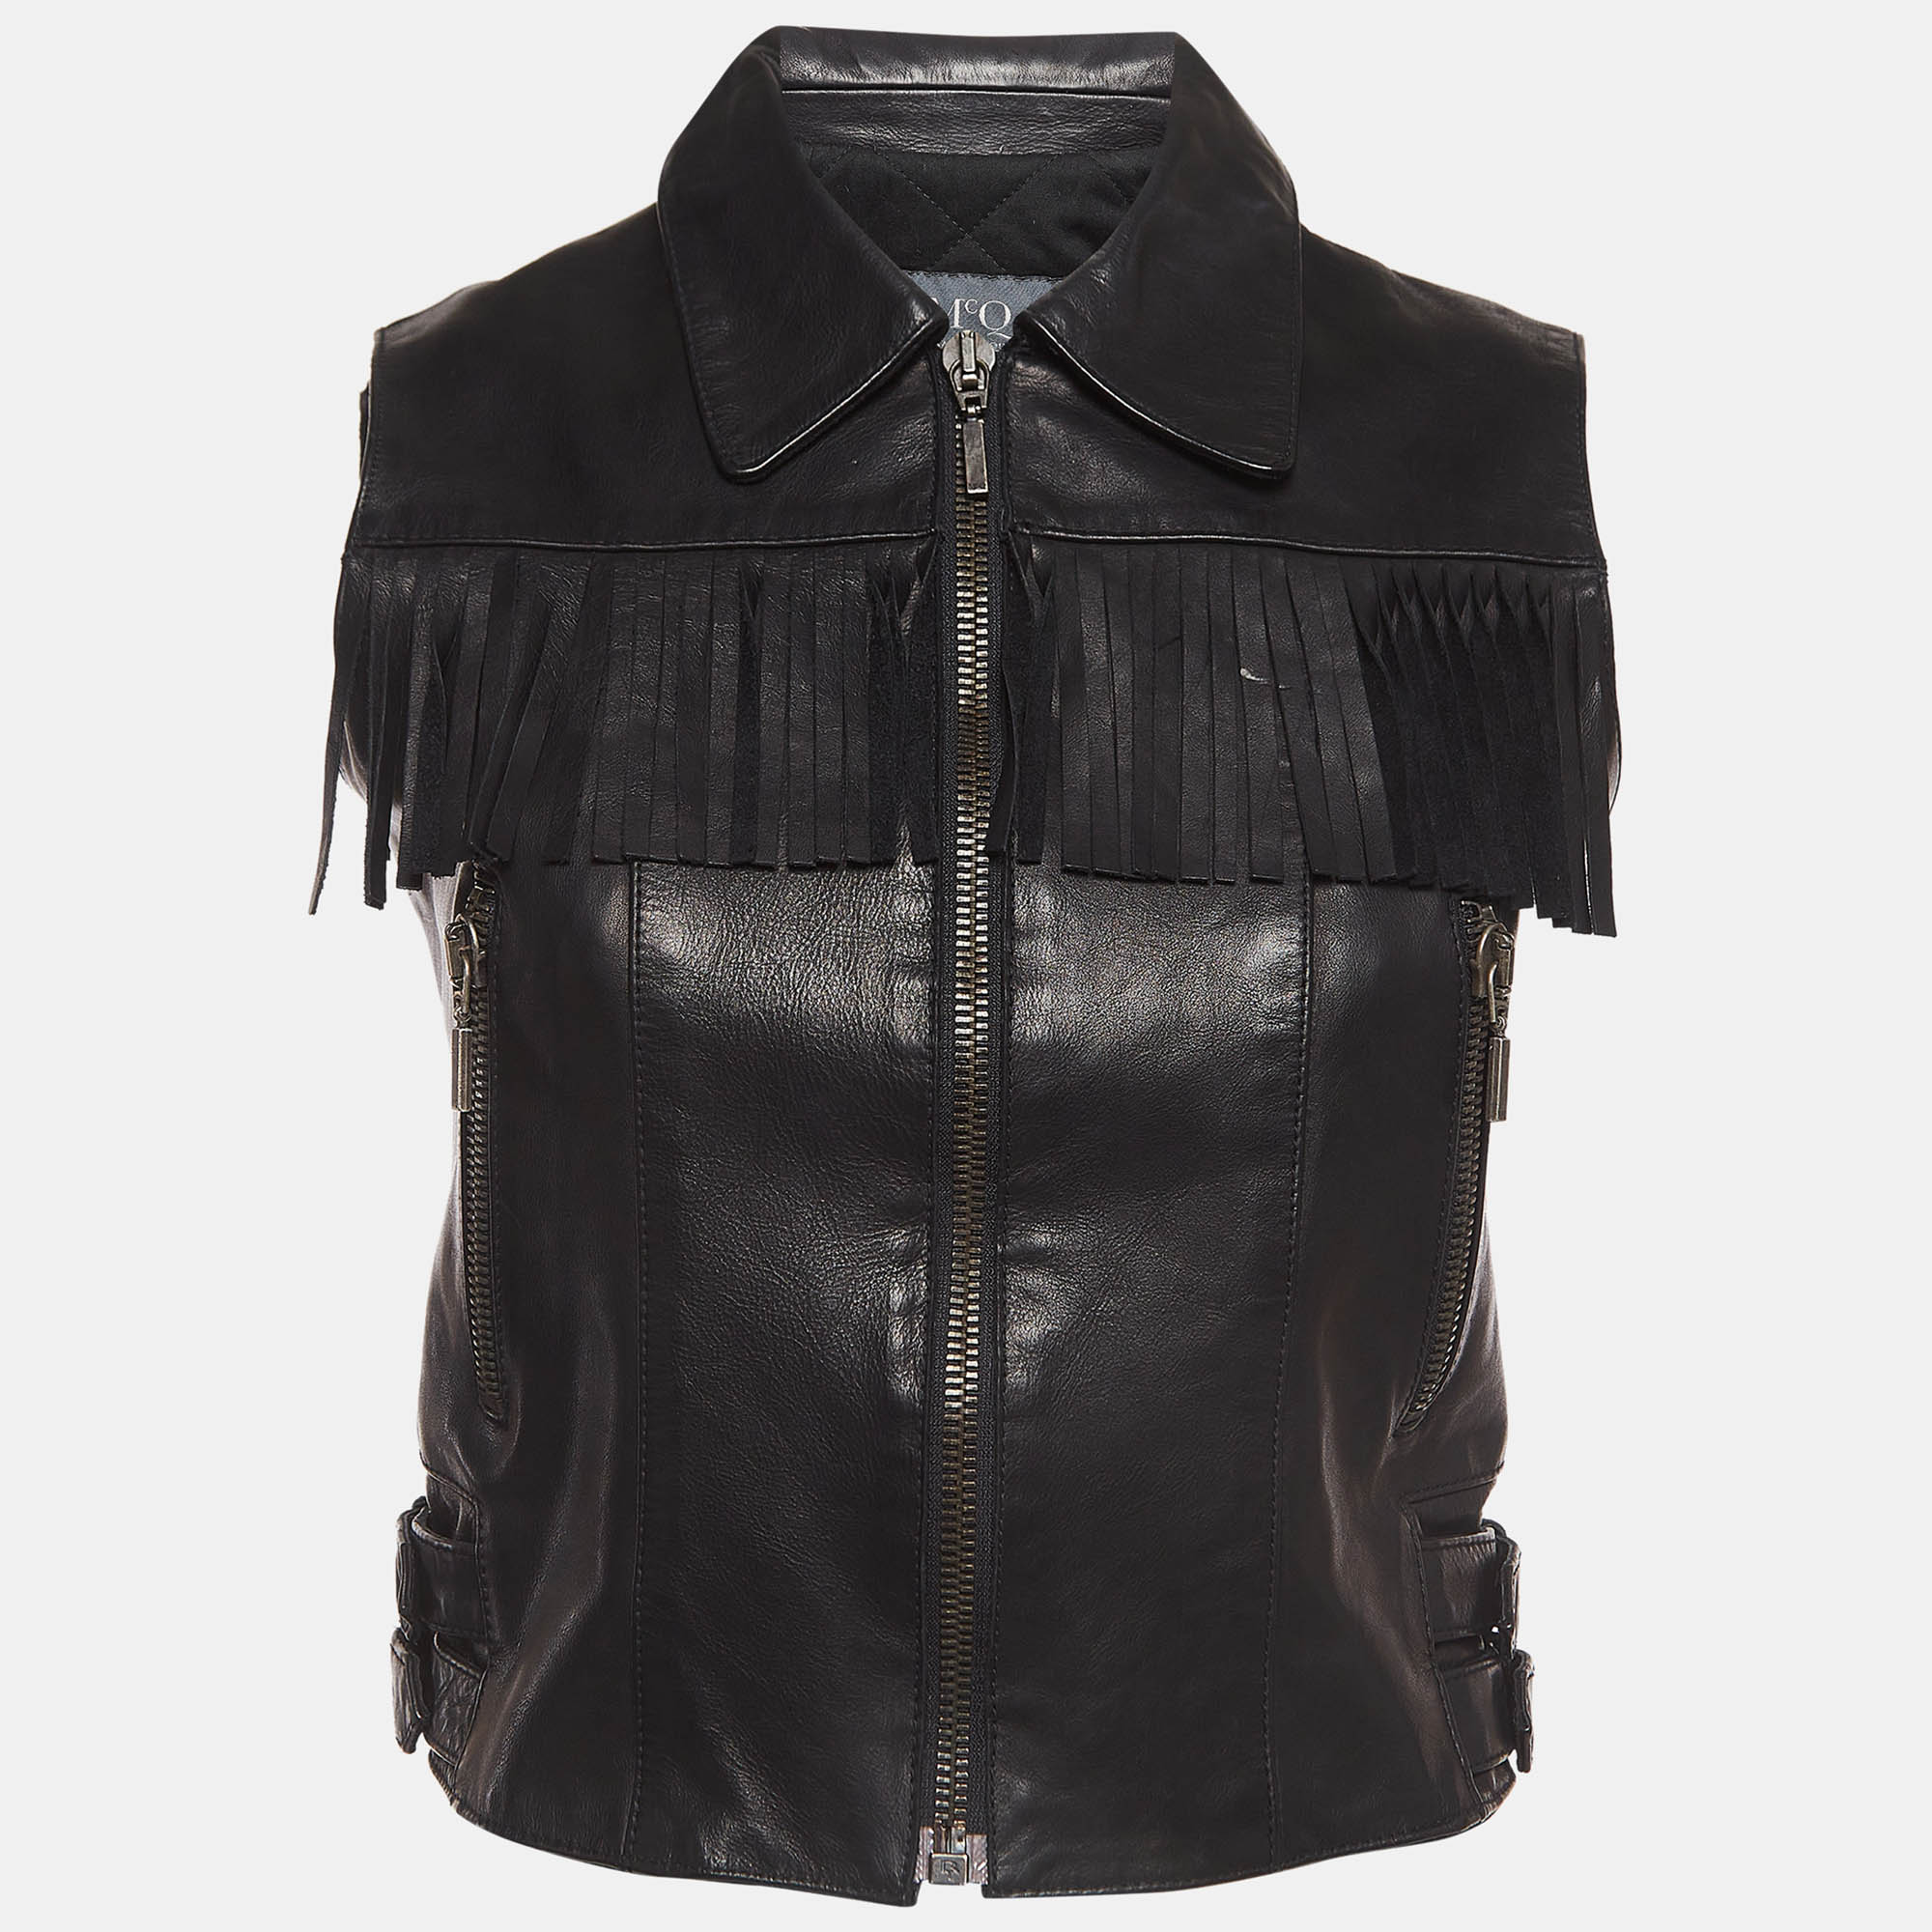 

McQ by Alexander McQueen Black Leather Fringe Detailed Vest S